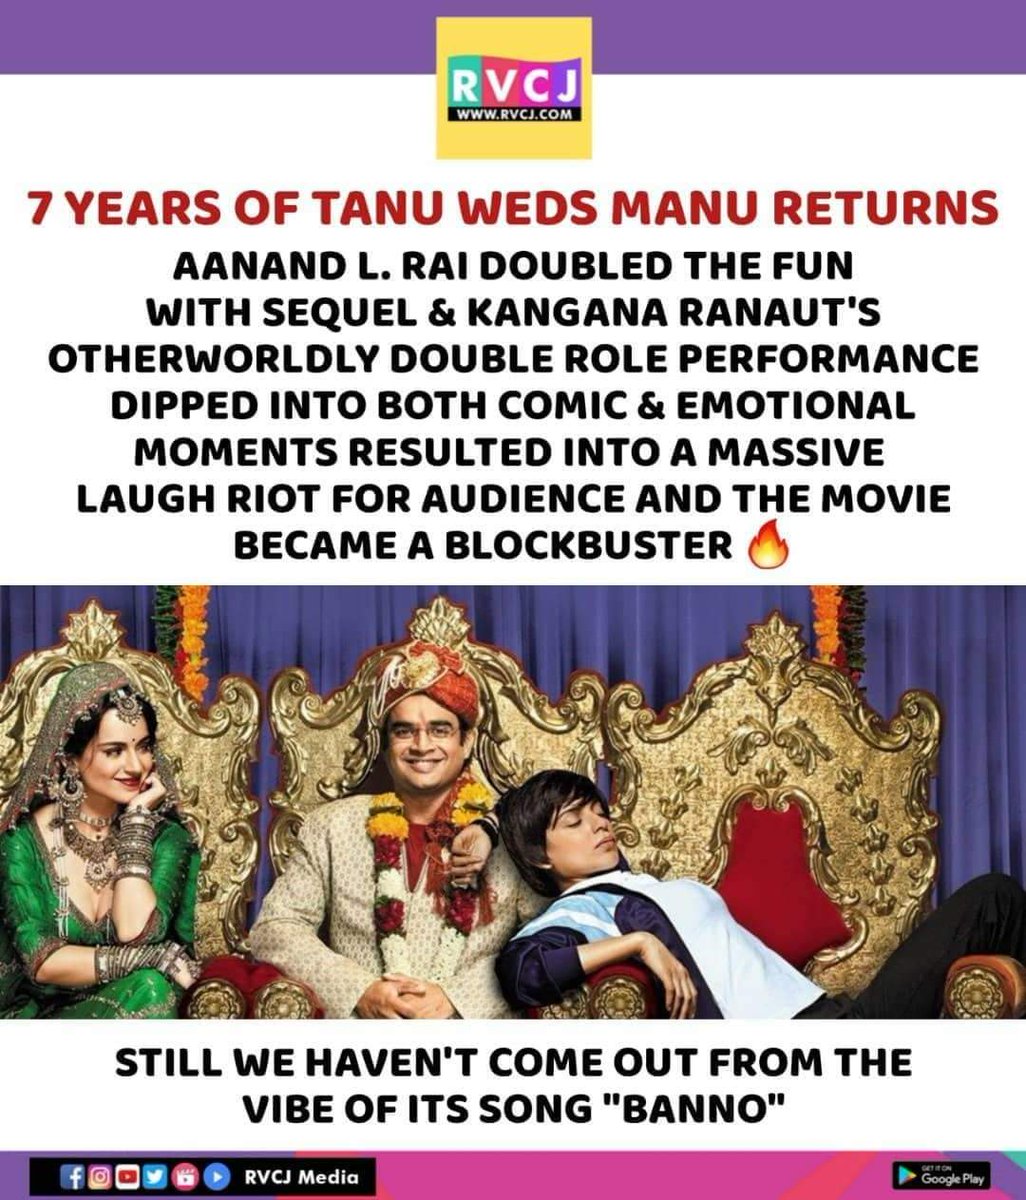 7 Years of Tanu Weds Manu Returns

#tanuwedsmanureturns #kanganaranaut #anandlrai #rvcjmovies #rvcjinsta